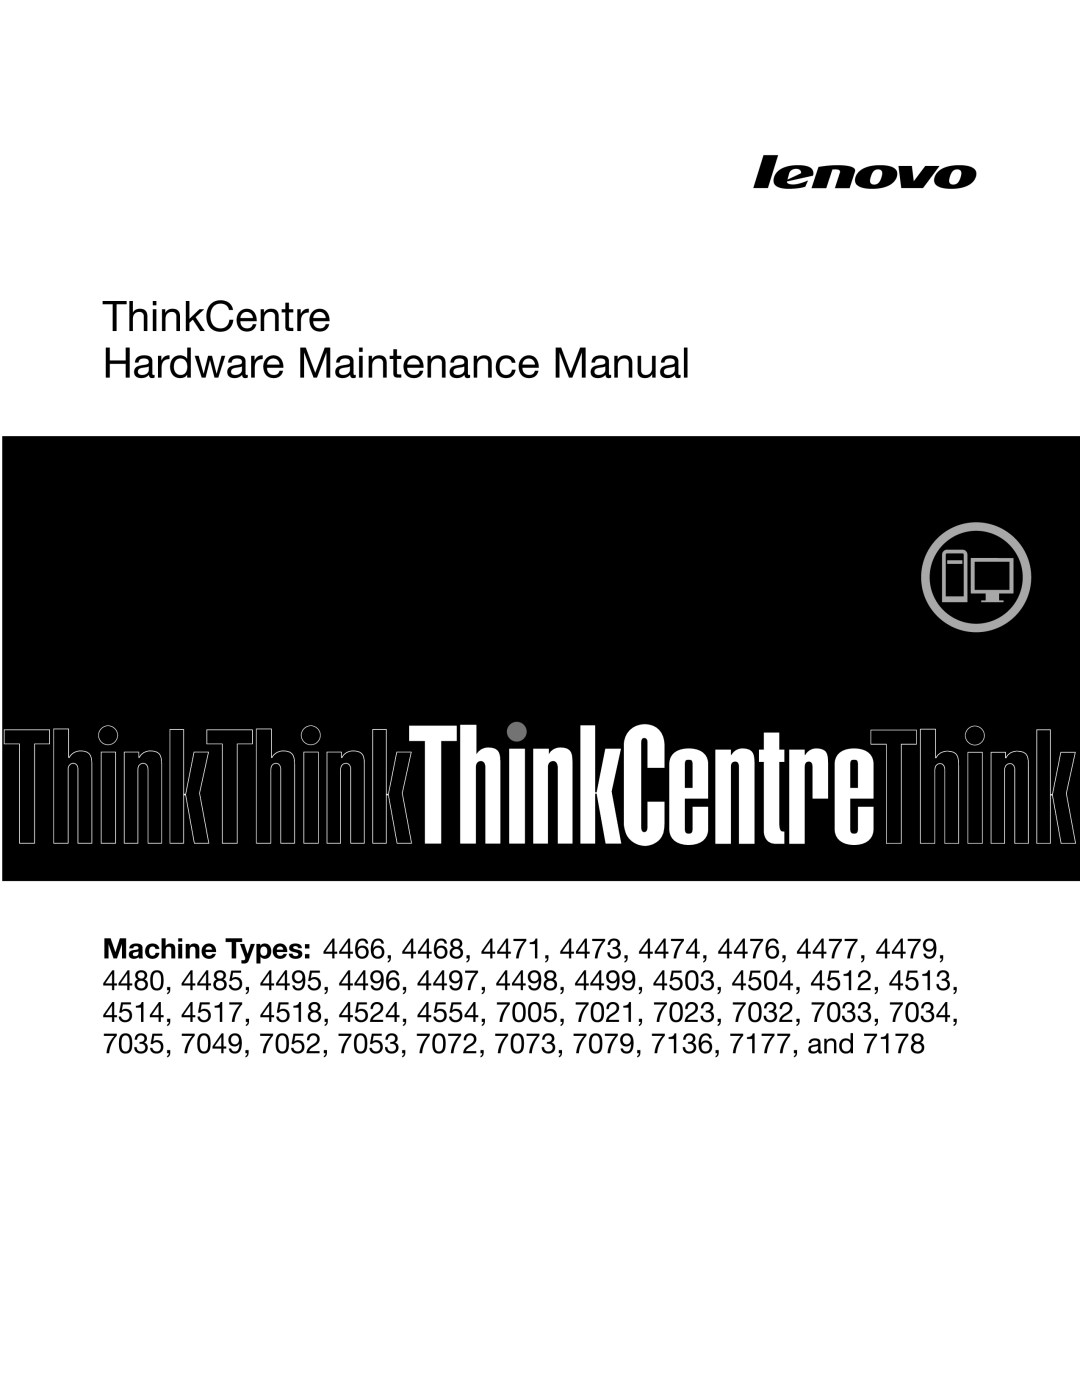 Lenovo 4466, 4471, 4498, 4480, 4485, 4474, 4496, 4477, 4497, 4476, 4495, 4499, 4473 manual ThinkCentre Hardware Maintenance Manual 